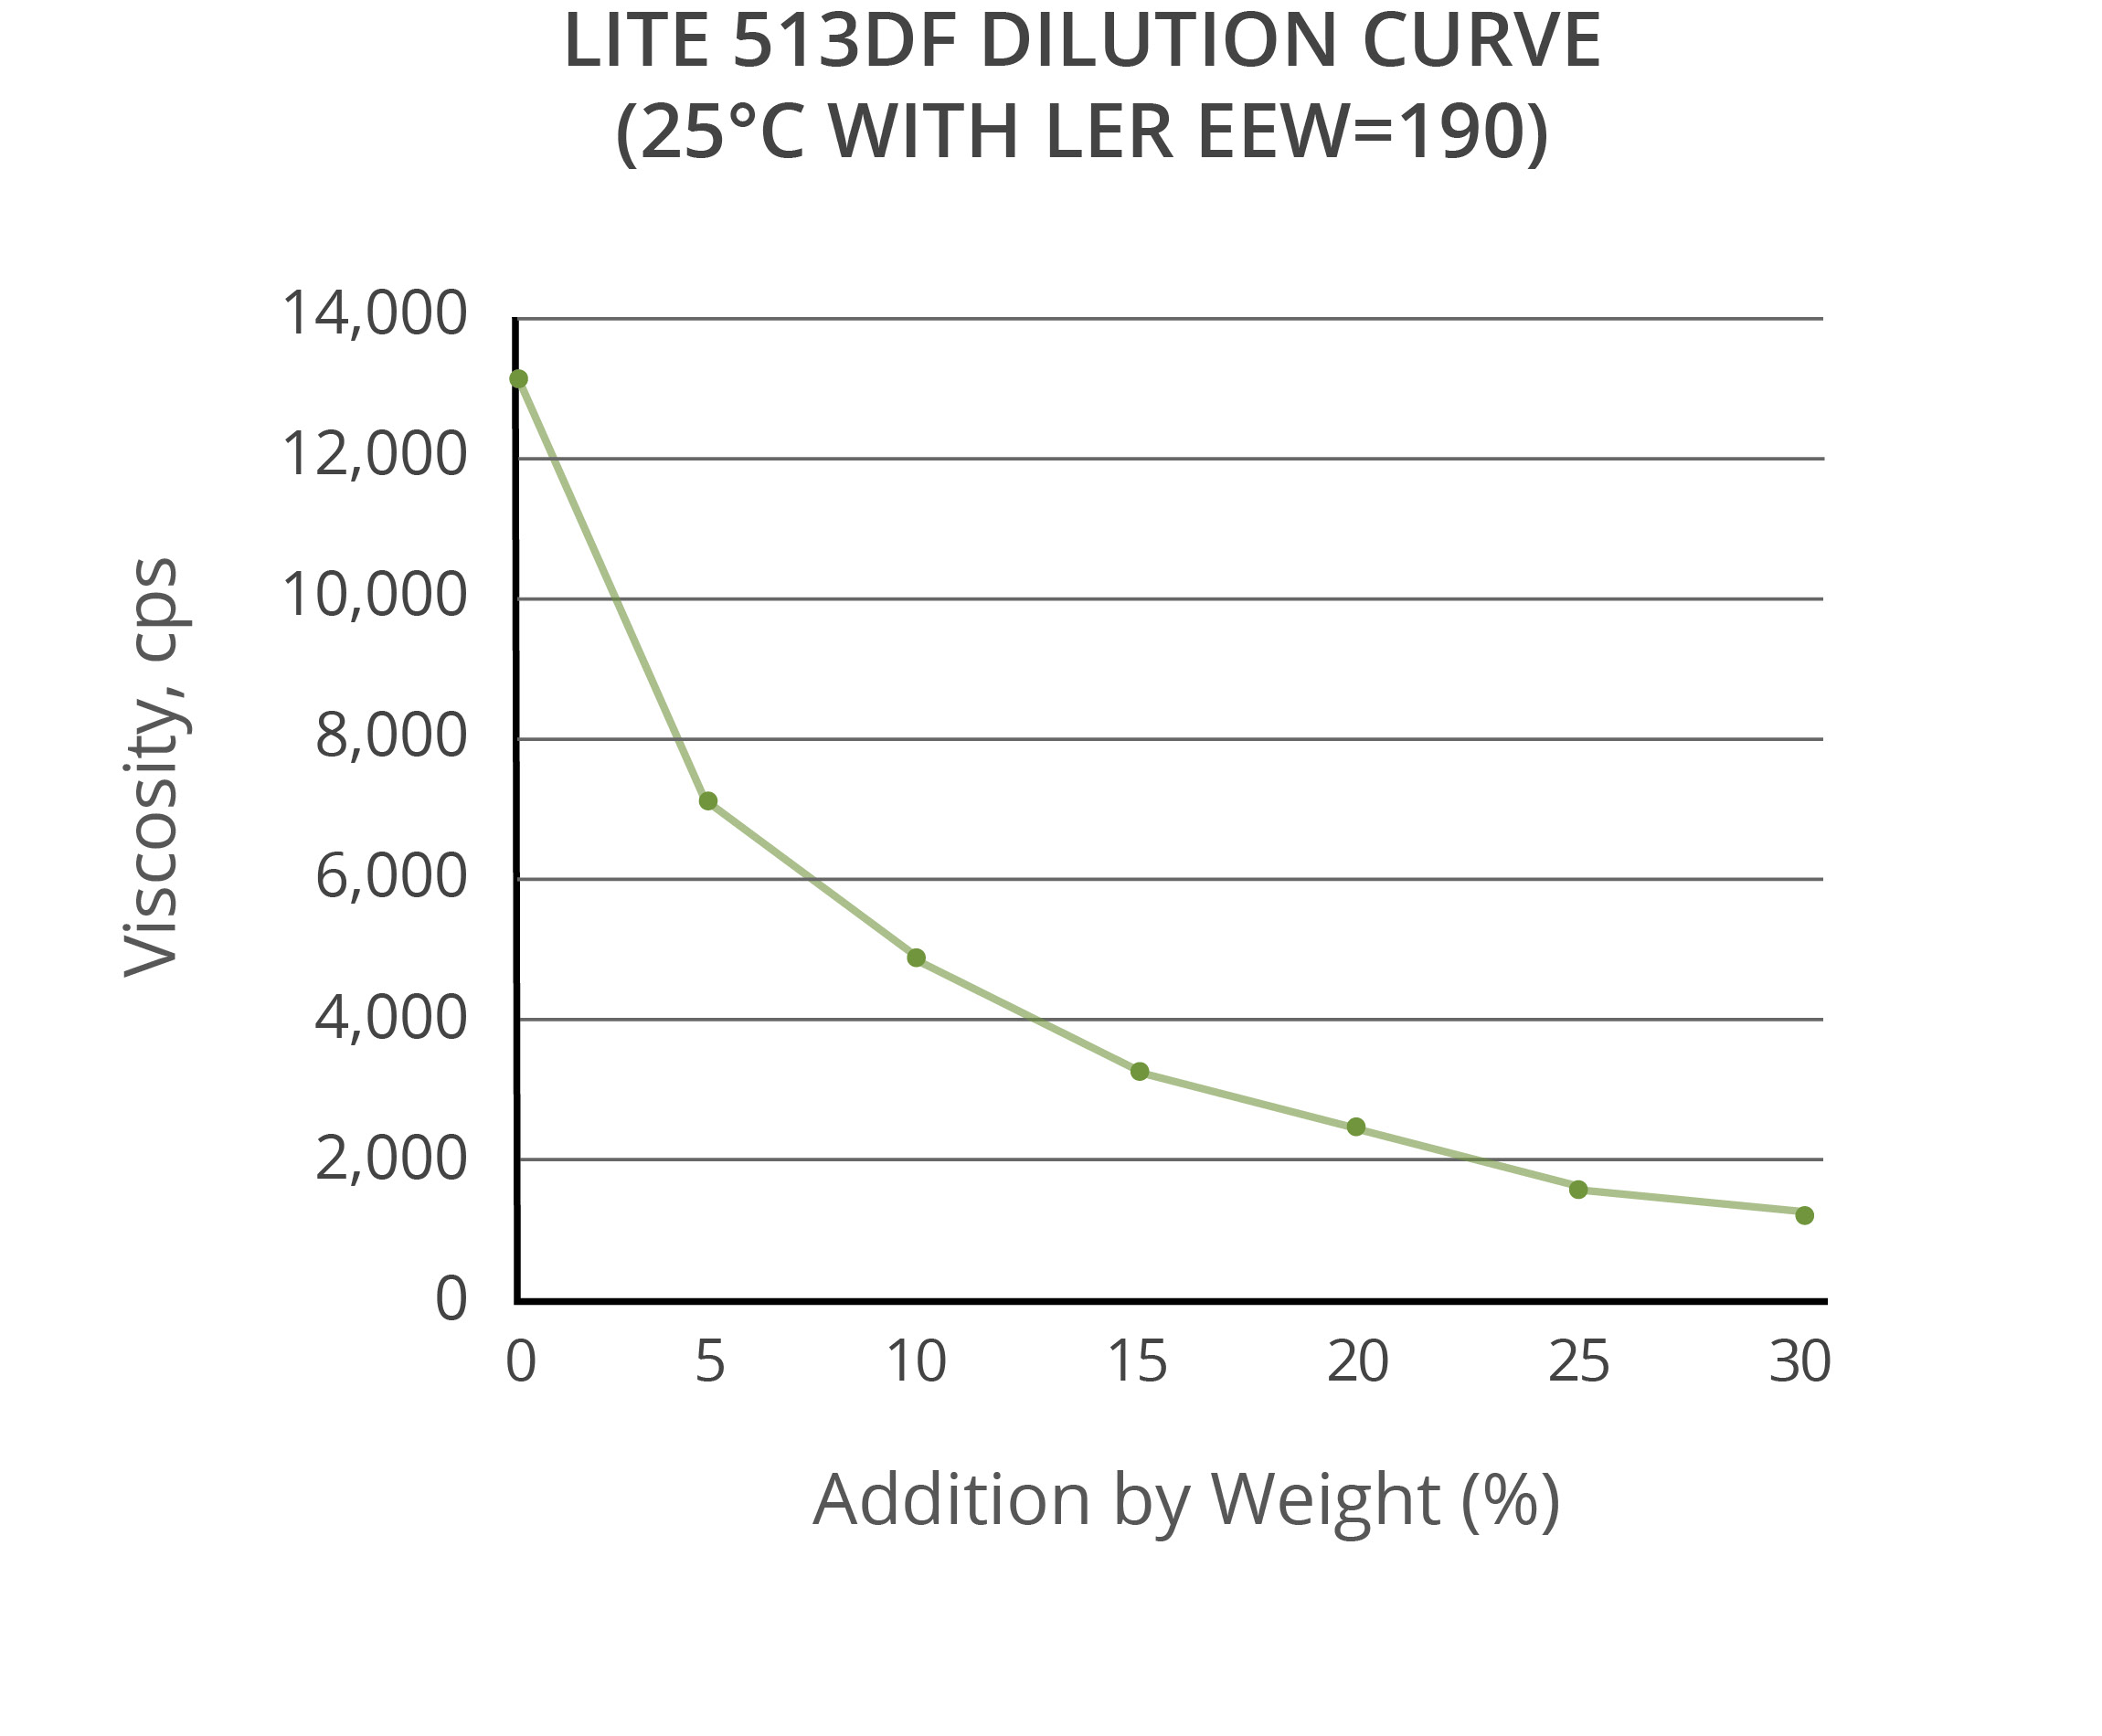 Cardolite LITE 513DF is a high biocontent diluent for epoxy applications